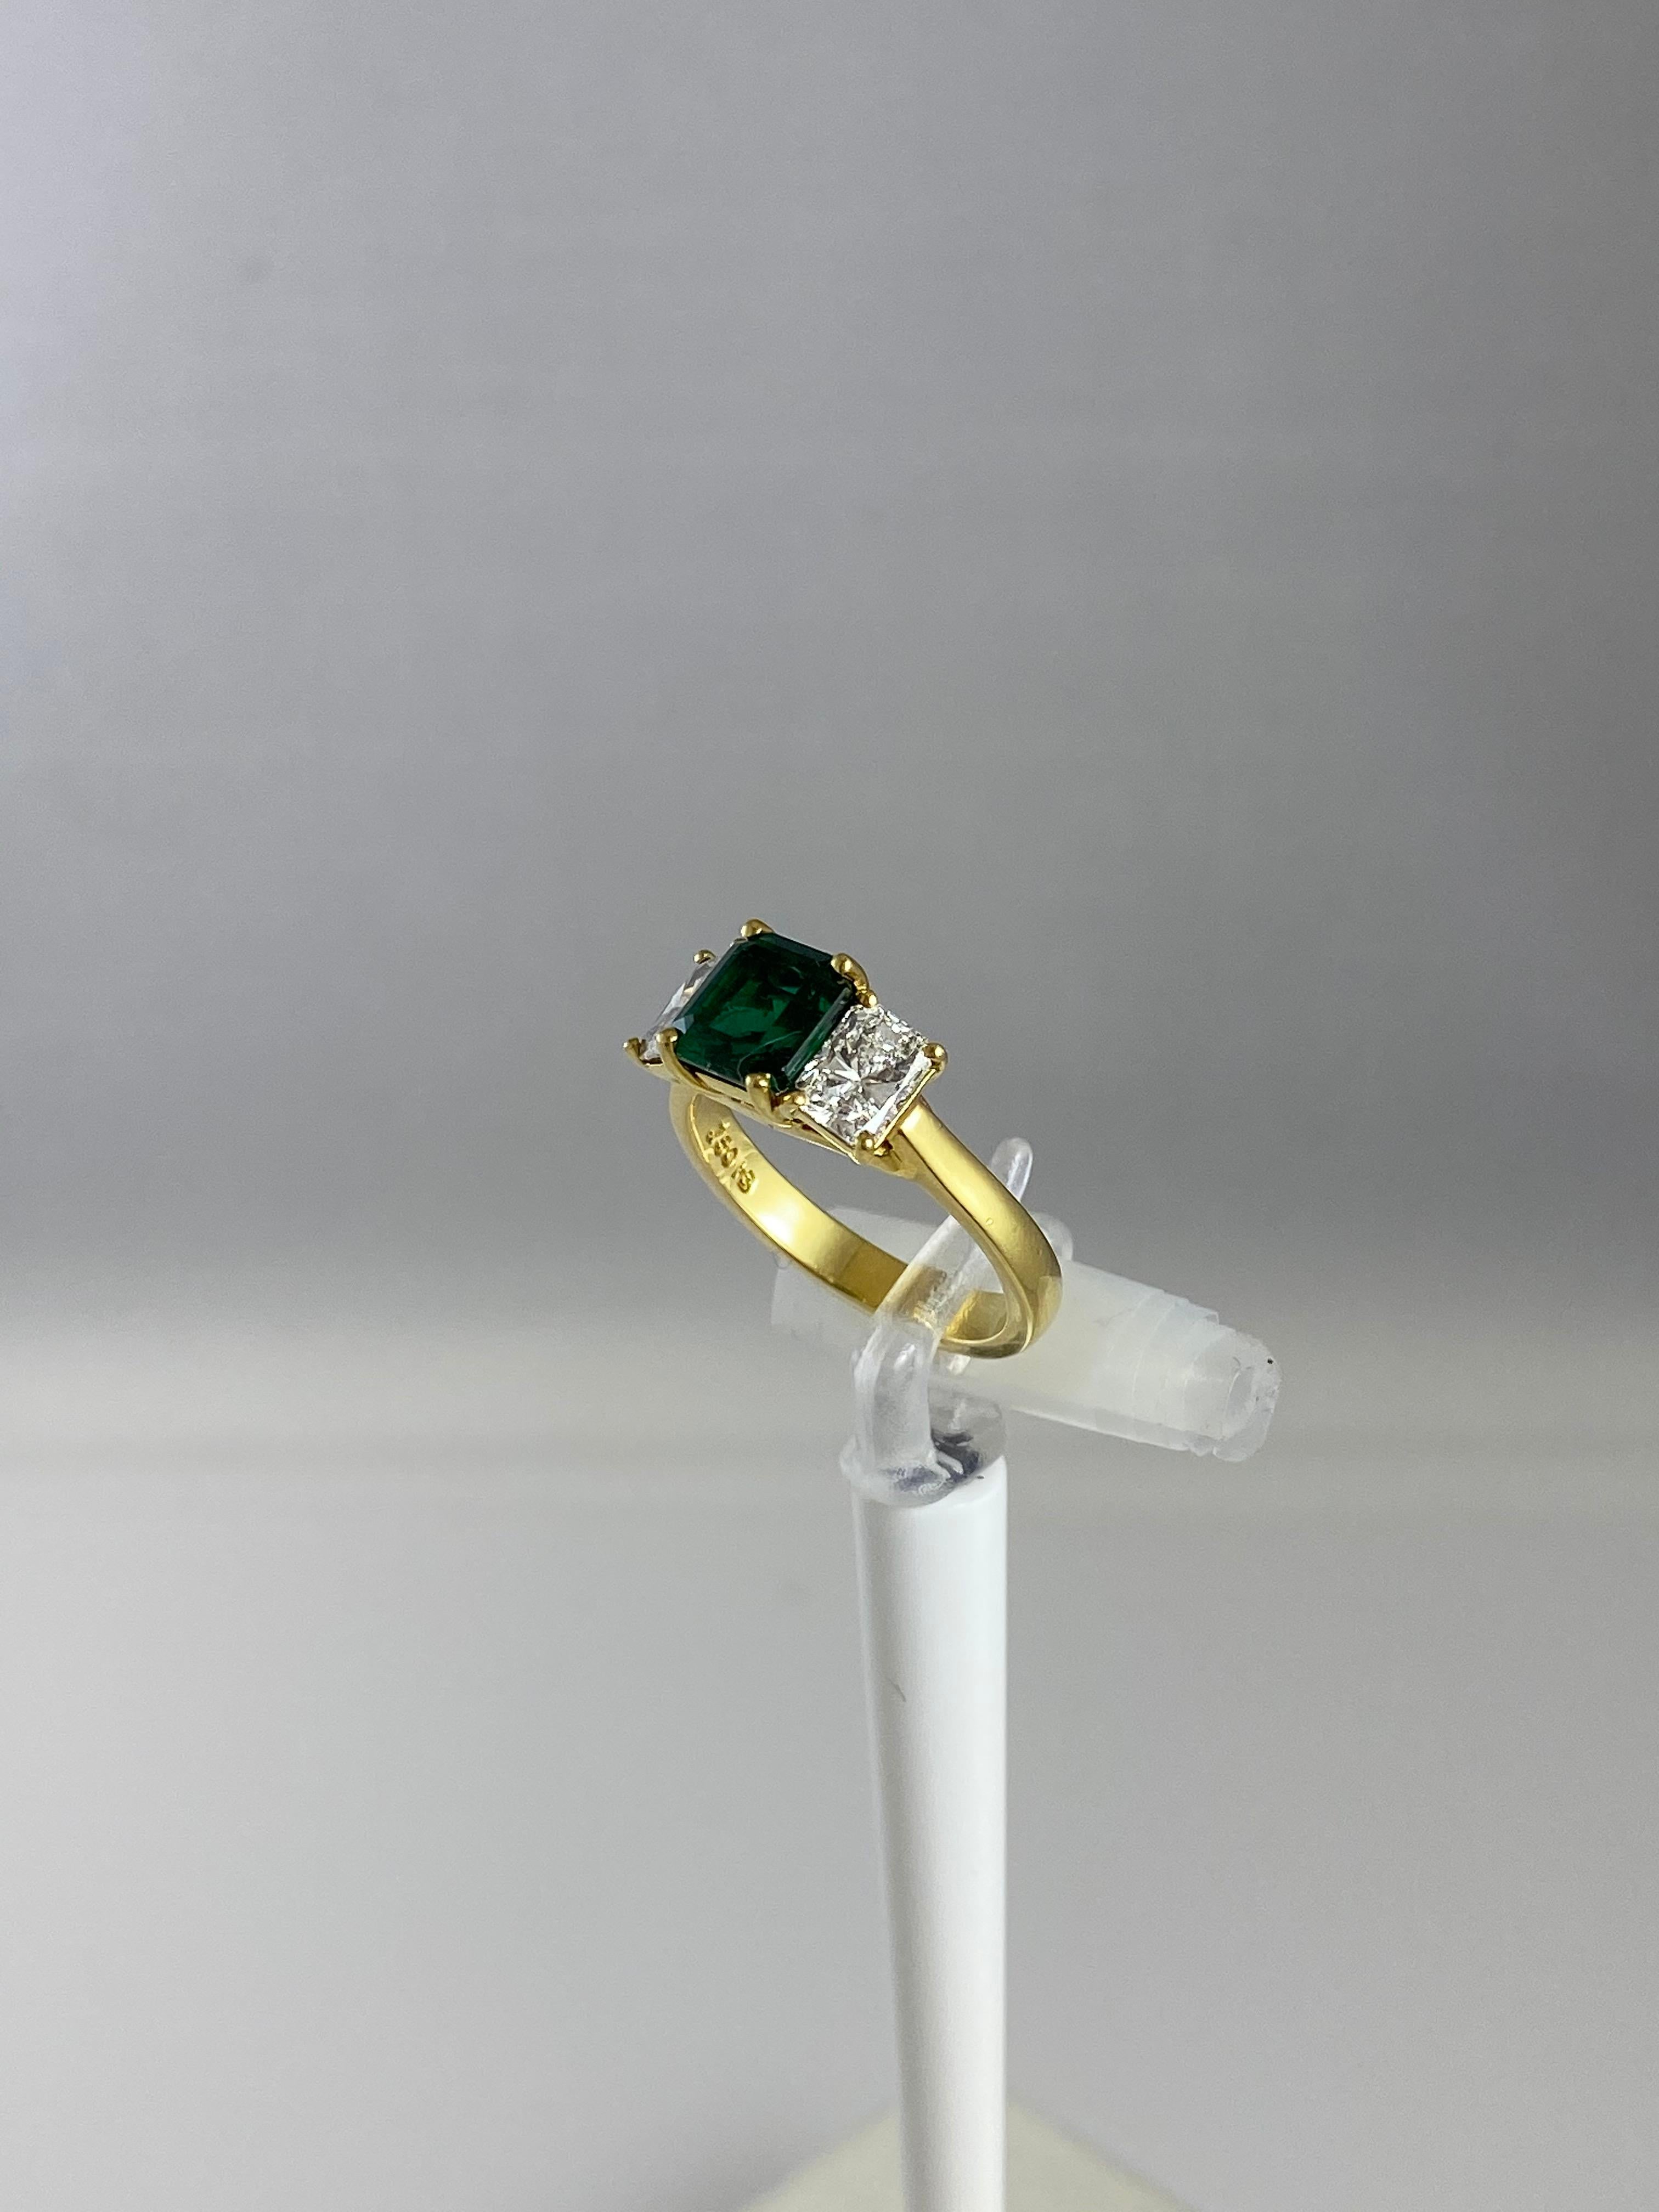 Hammerman Jewels 18k Yellow Gold Emerald and Diamond Ring. 1.44 carat emerald, 1.21 carats diamonds. Size 5.5.